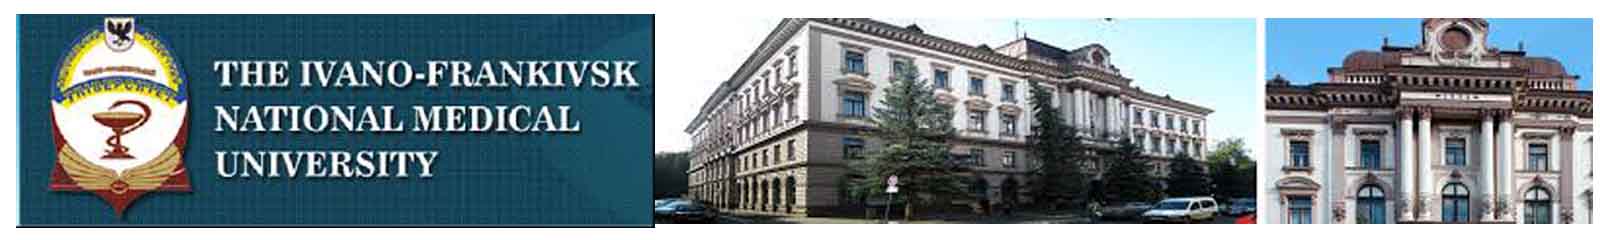 ivano frankivsk national medical university